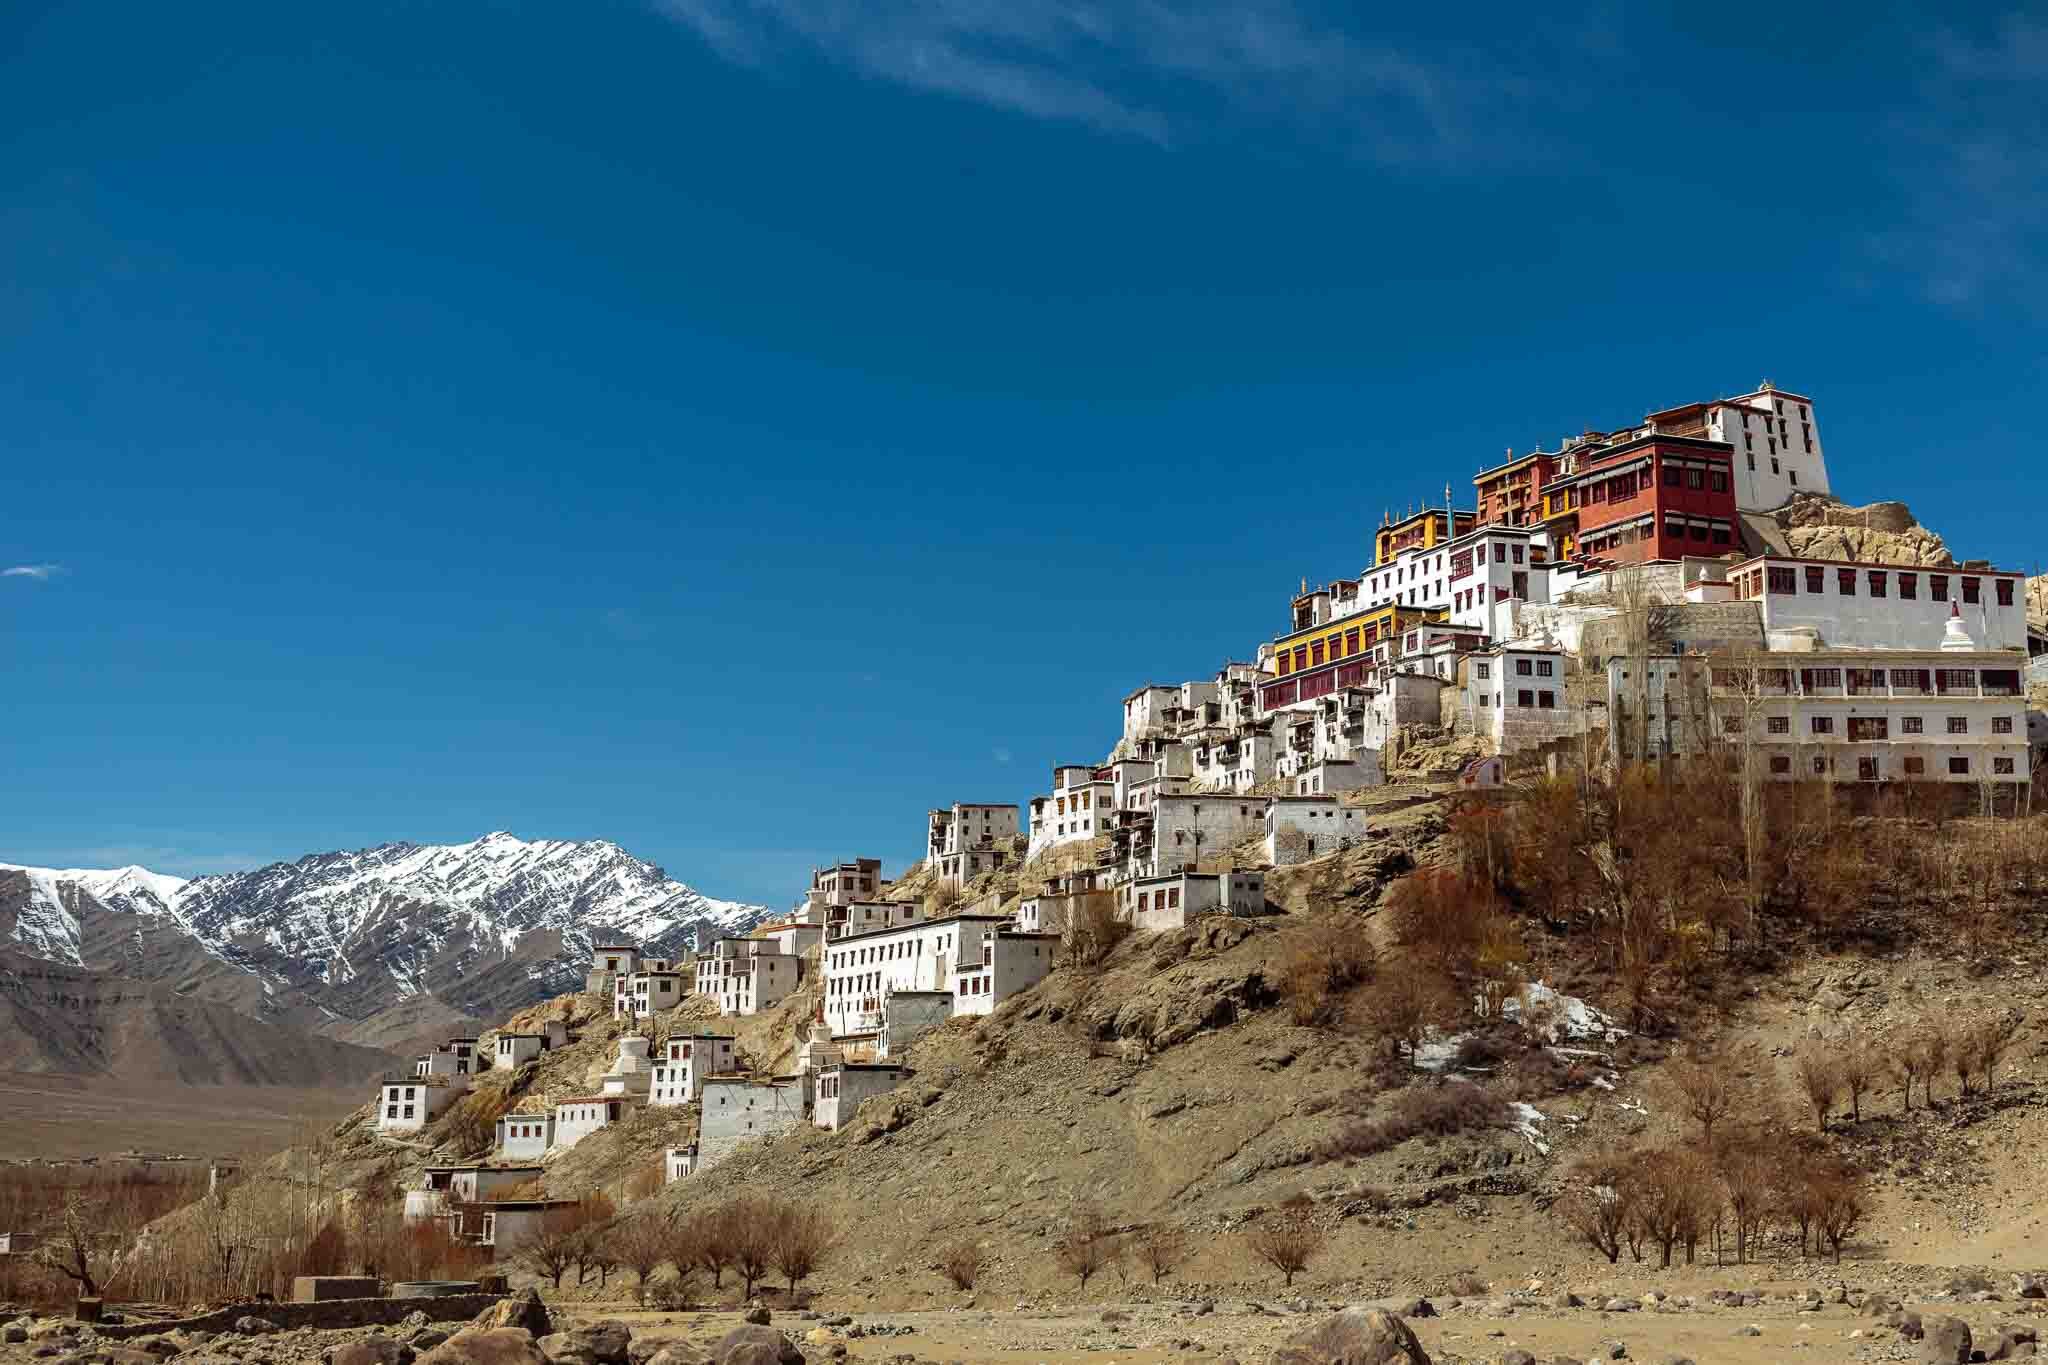 130317-Thiksey-Ladakh-India-113406.jpg